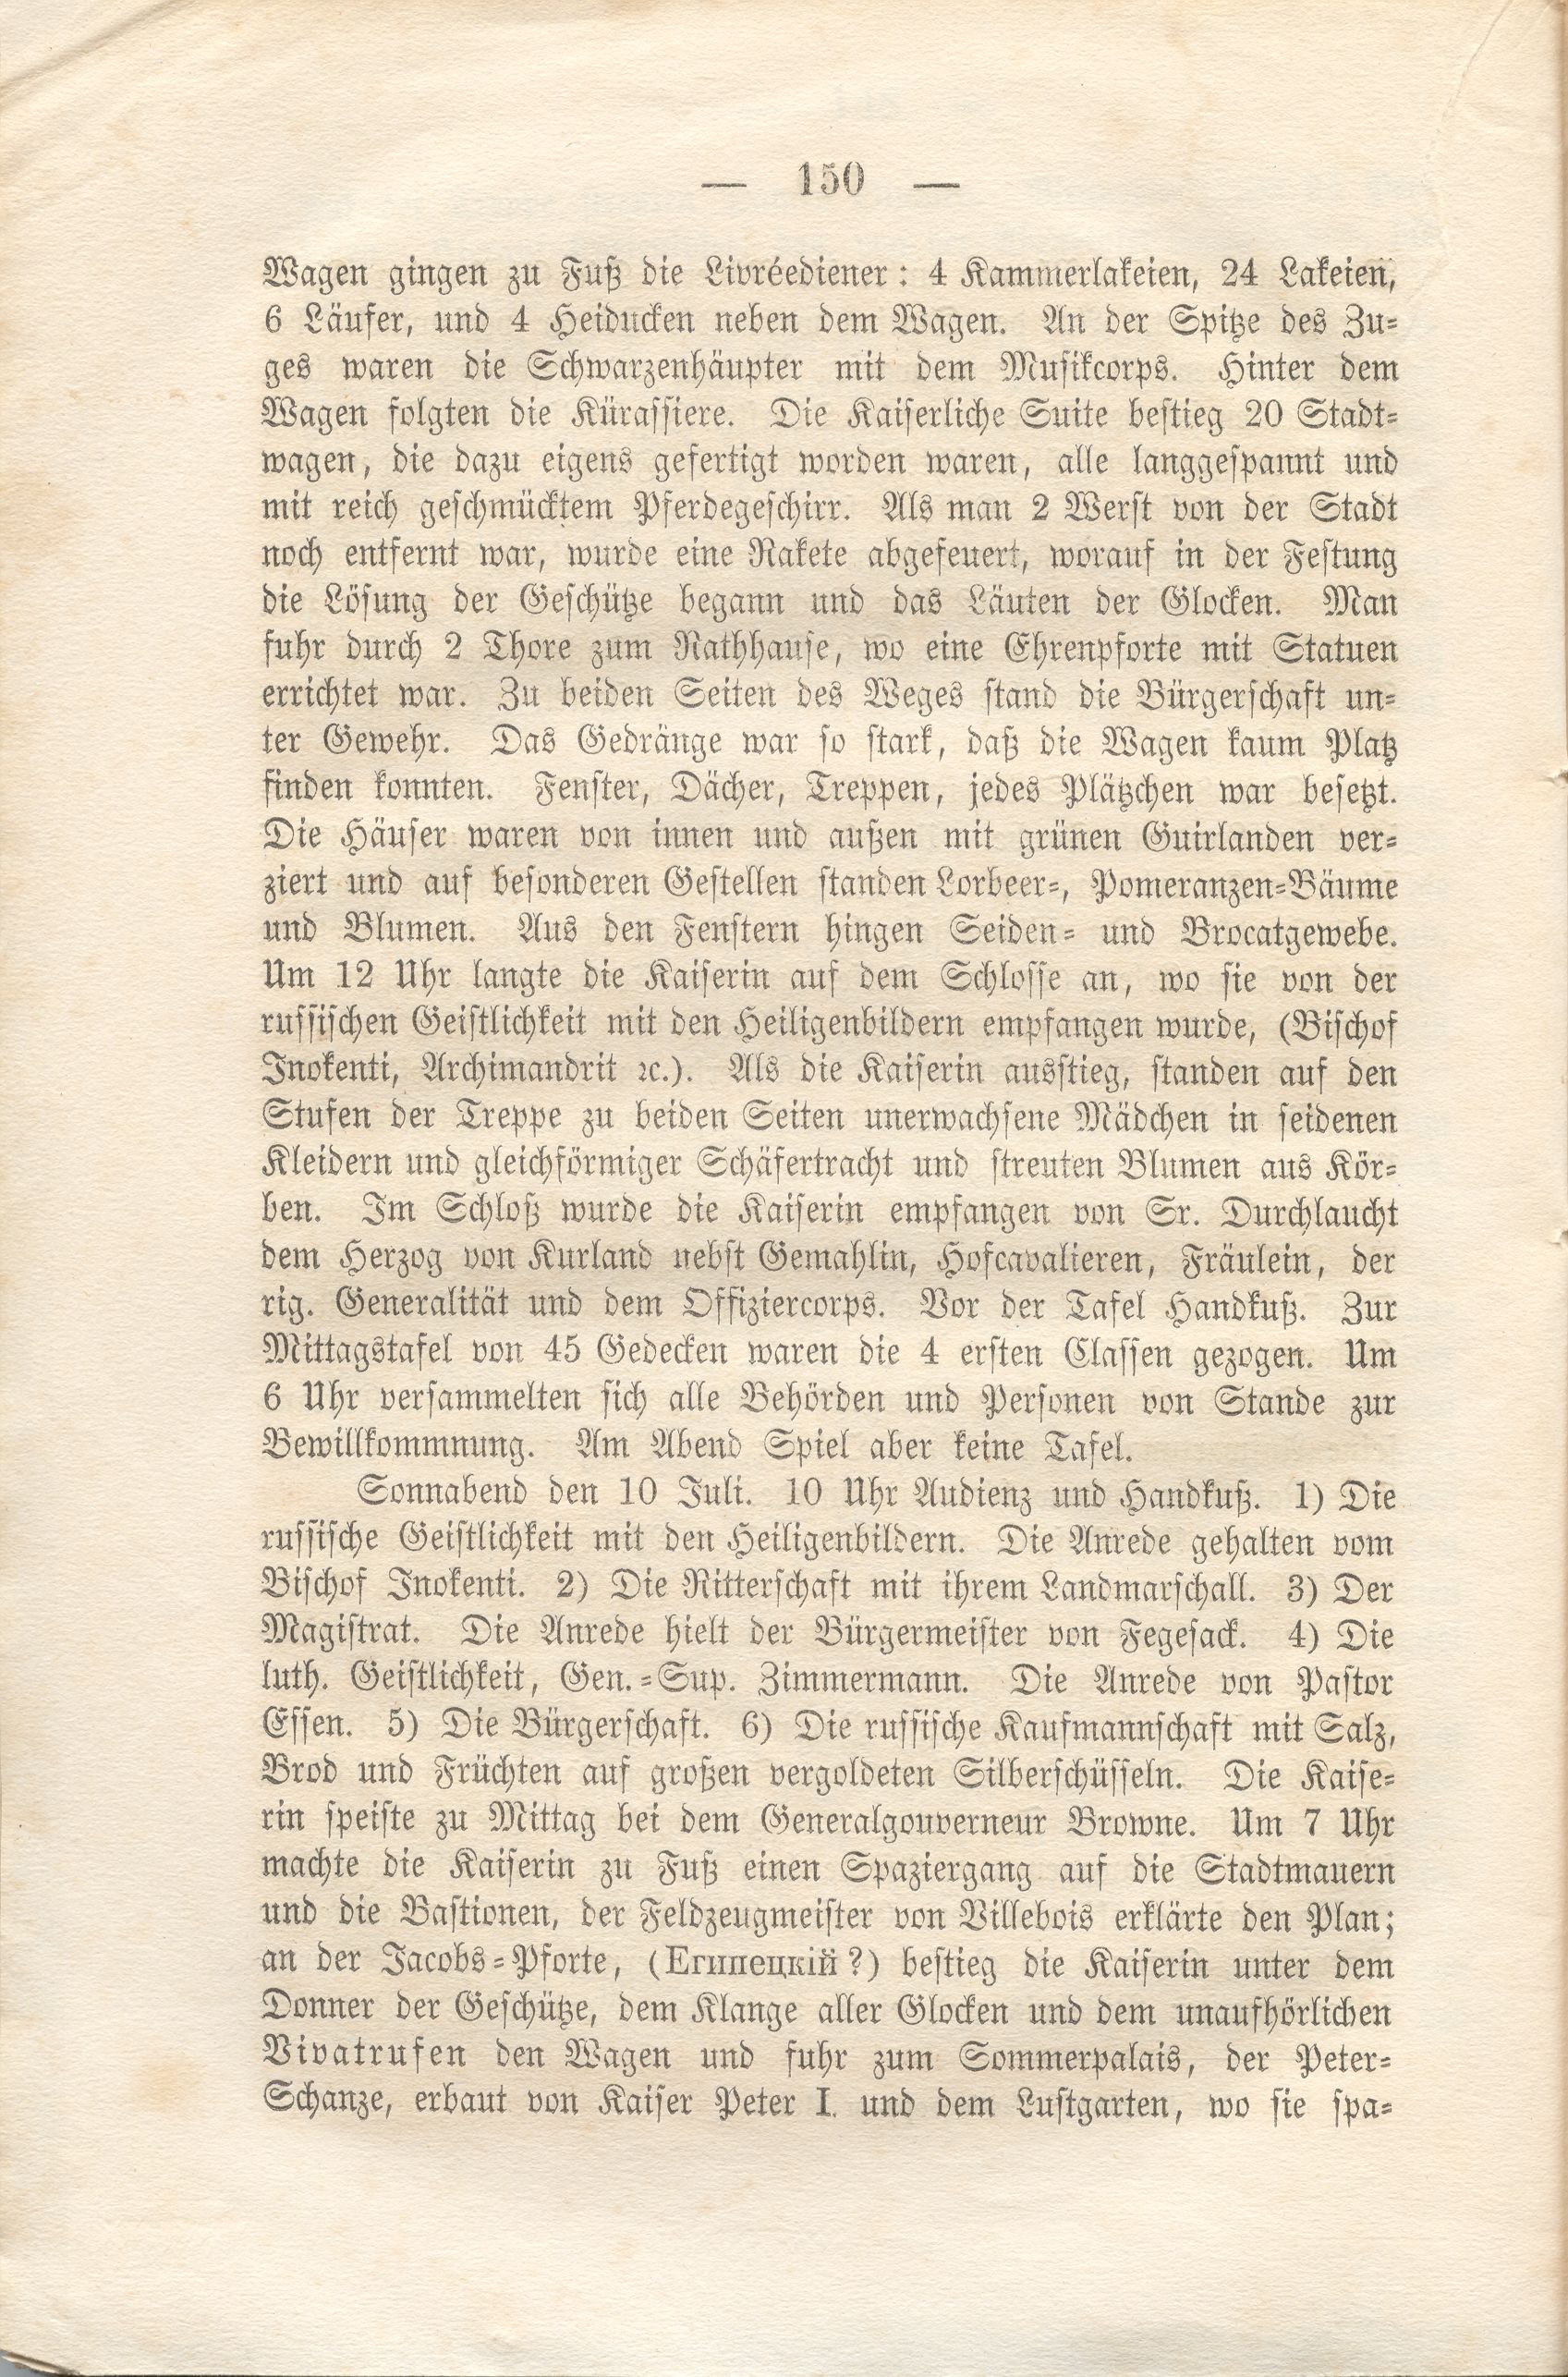 Wagien (1868) | 154. (150) Основной текст